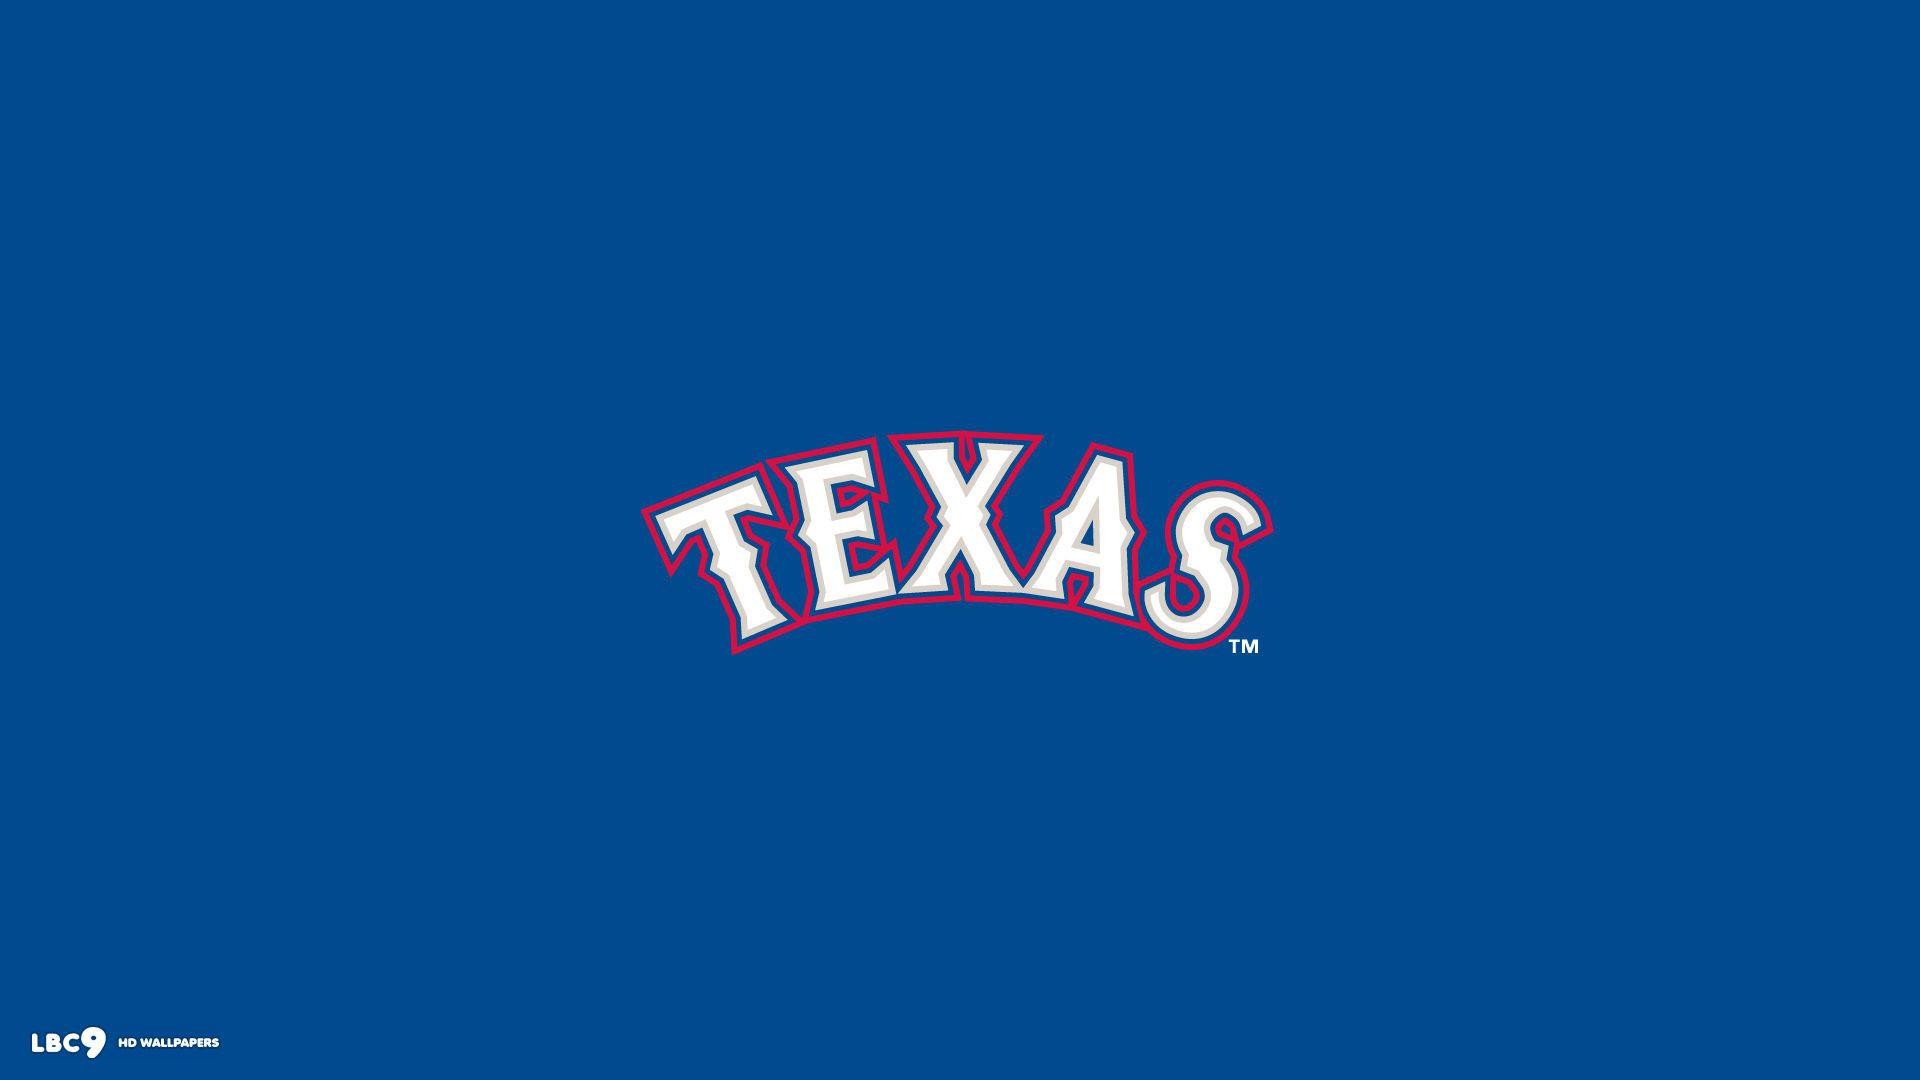 Texas Rangers Wallpapers - Top Free Texas Rangers Backgrounds